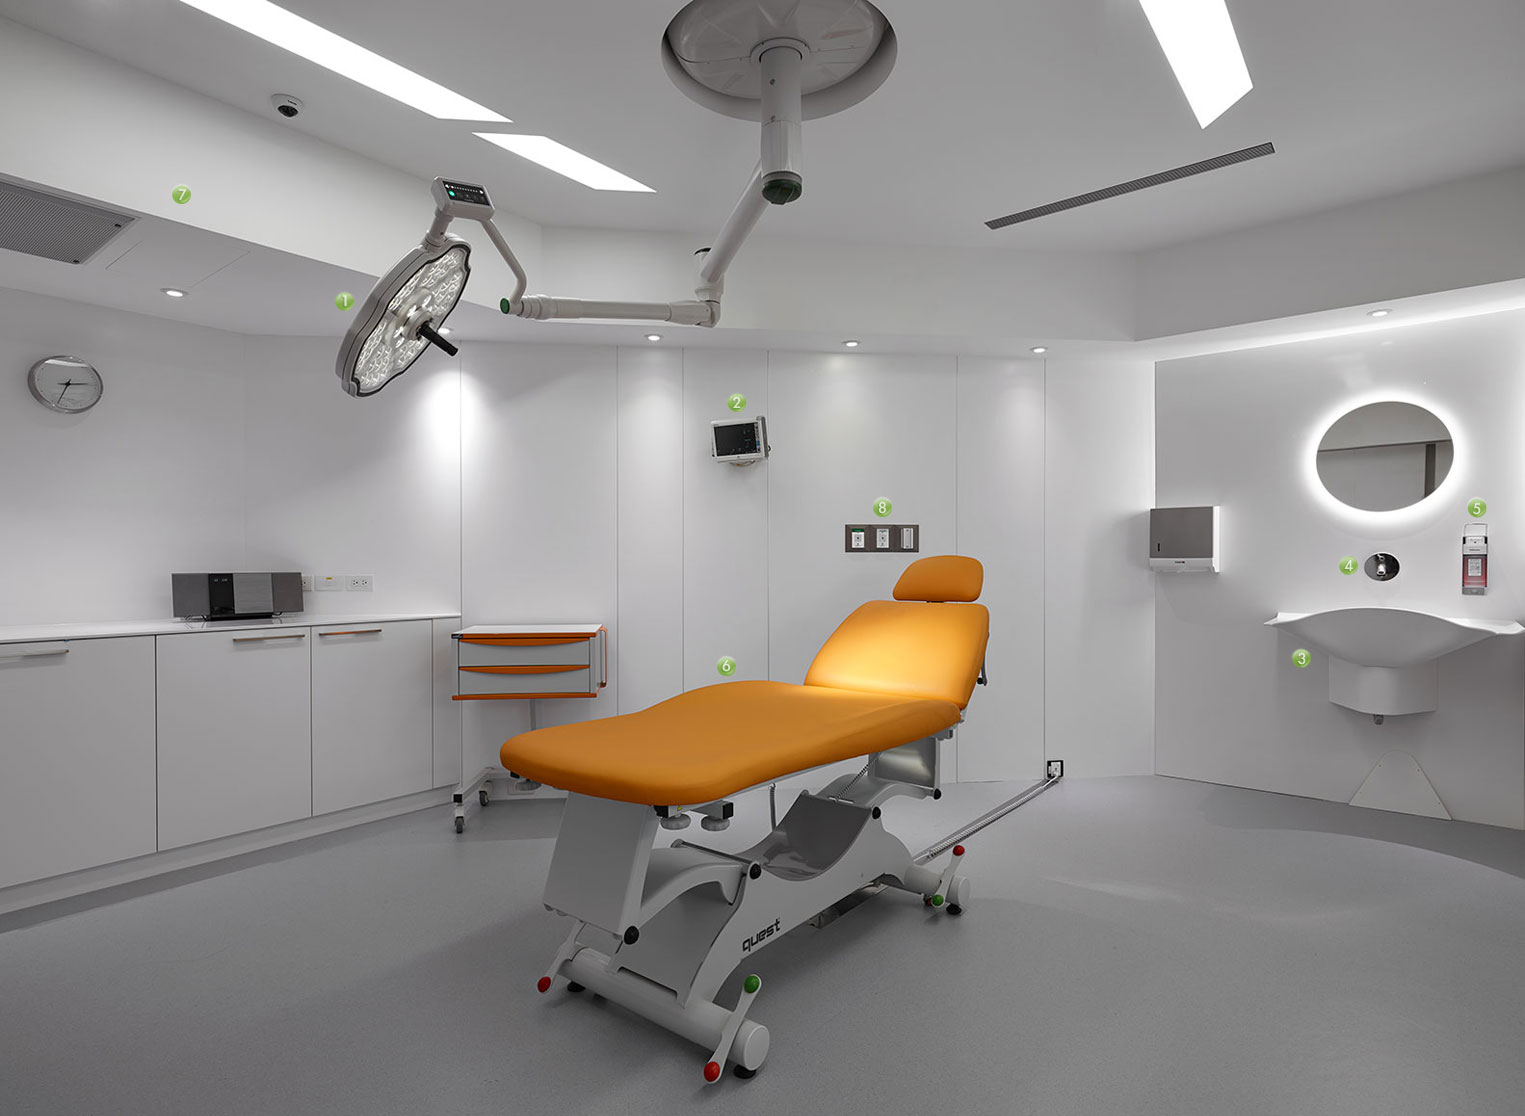 Mini-invasive operation room